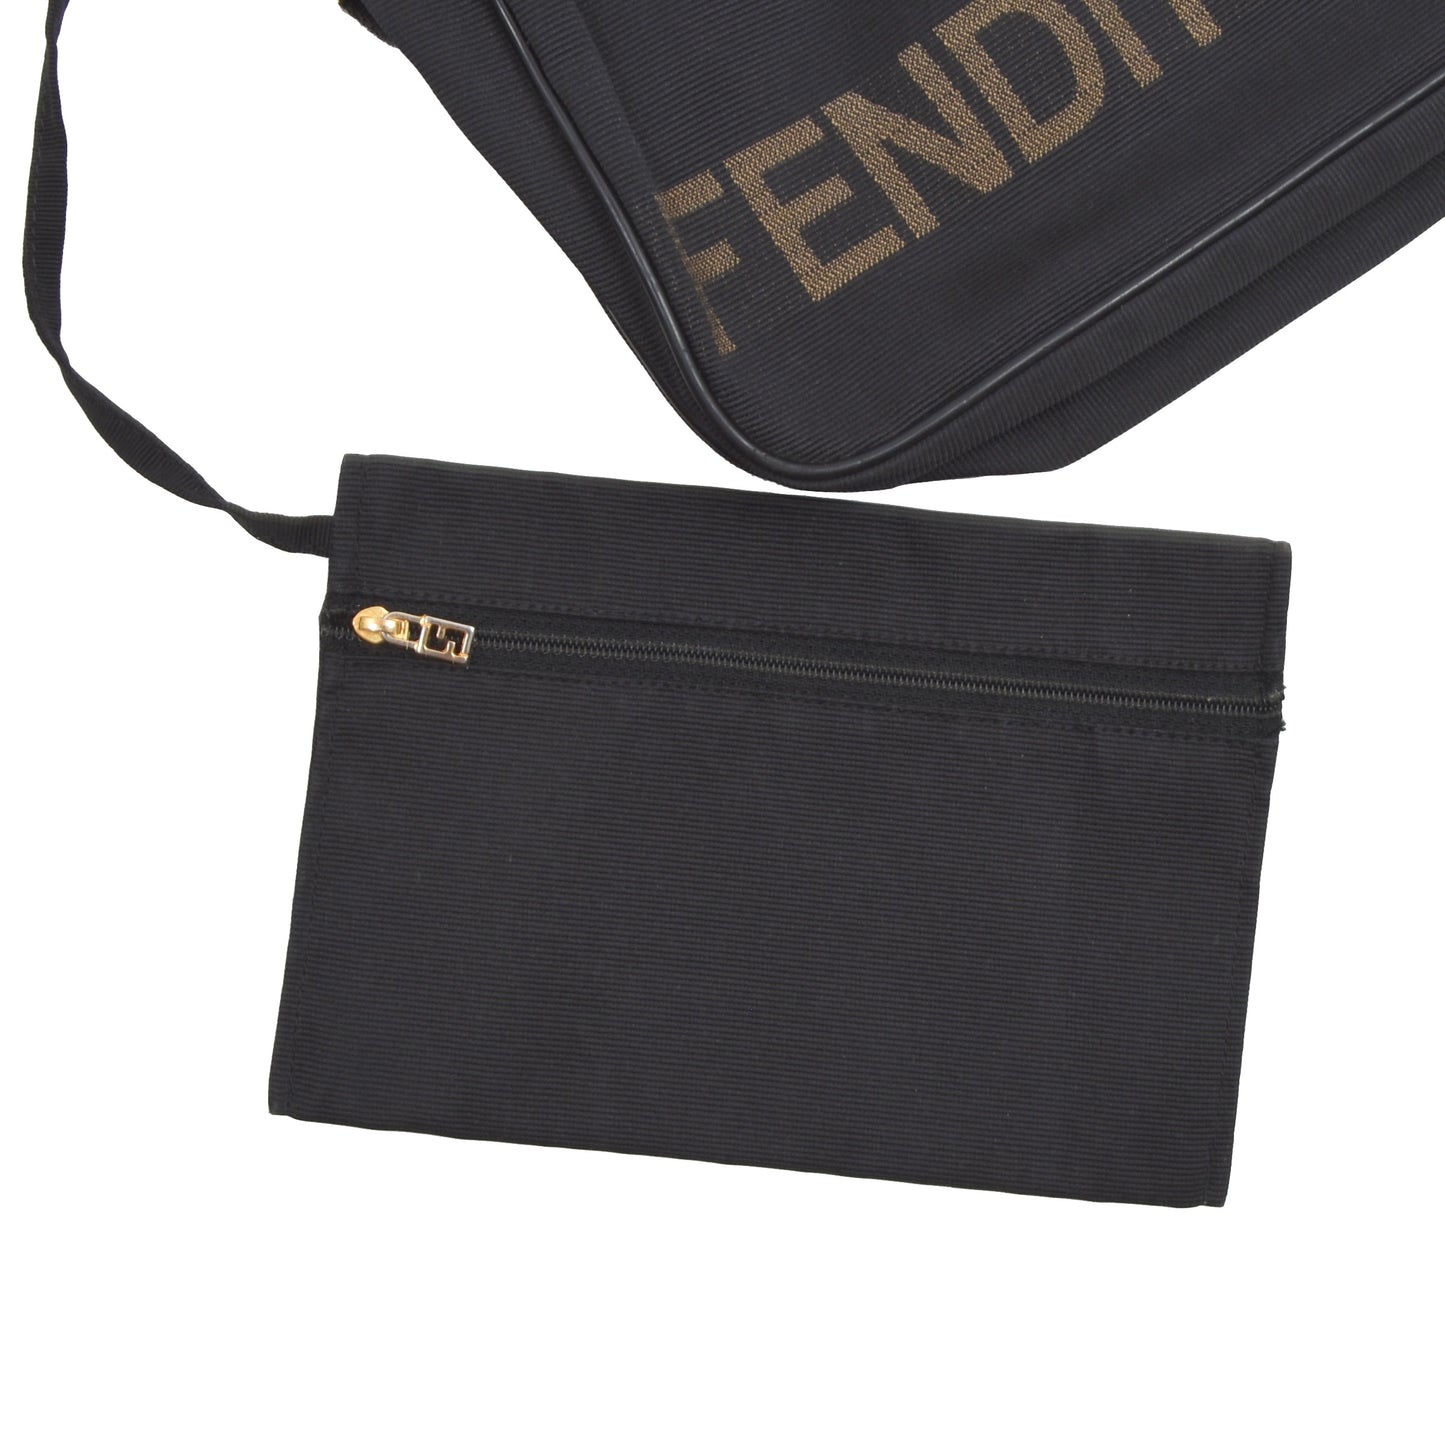 Vintage Fendi Cross Body Bag - Black